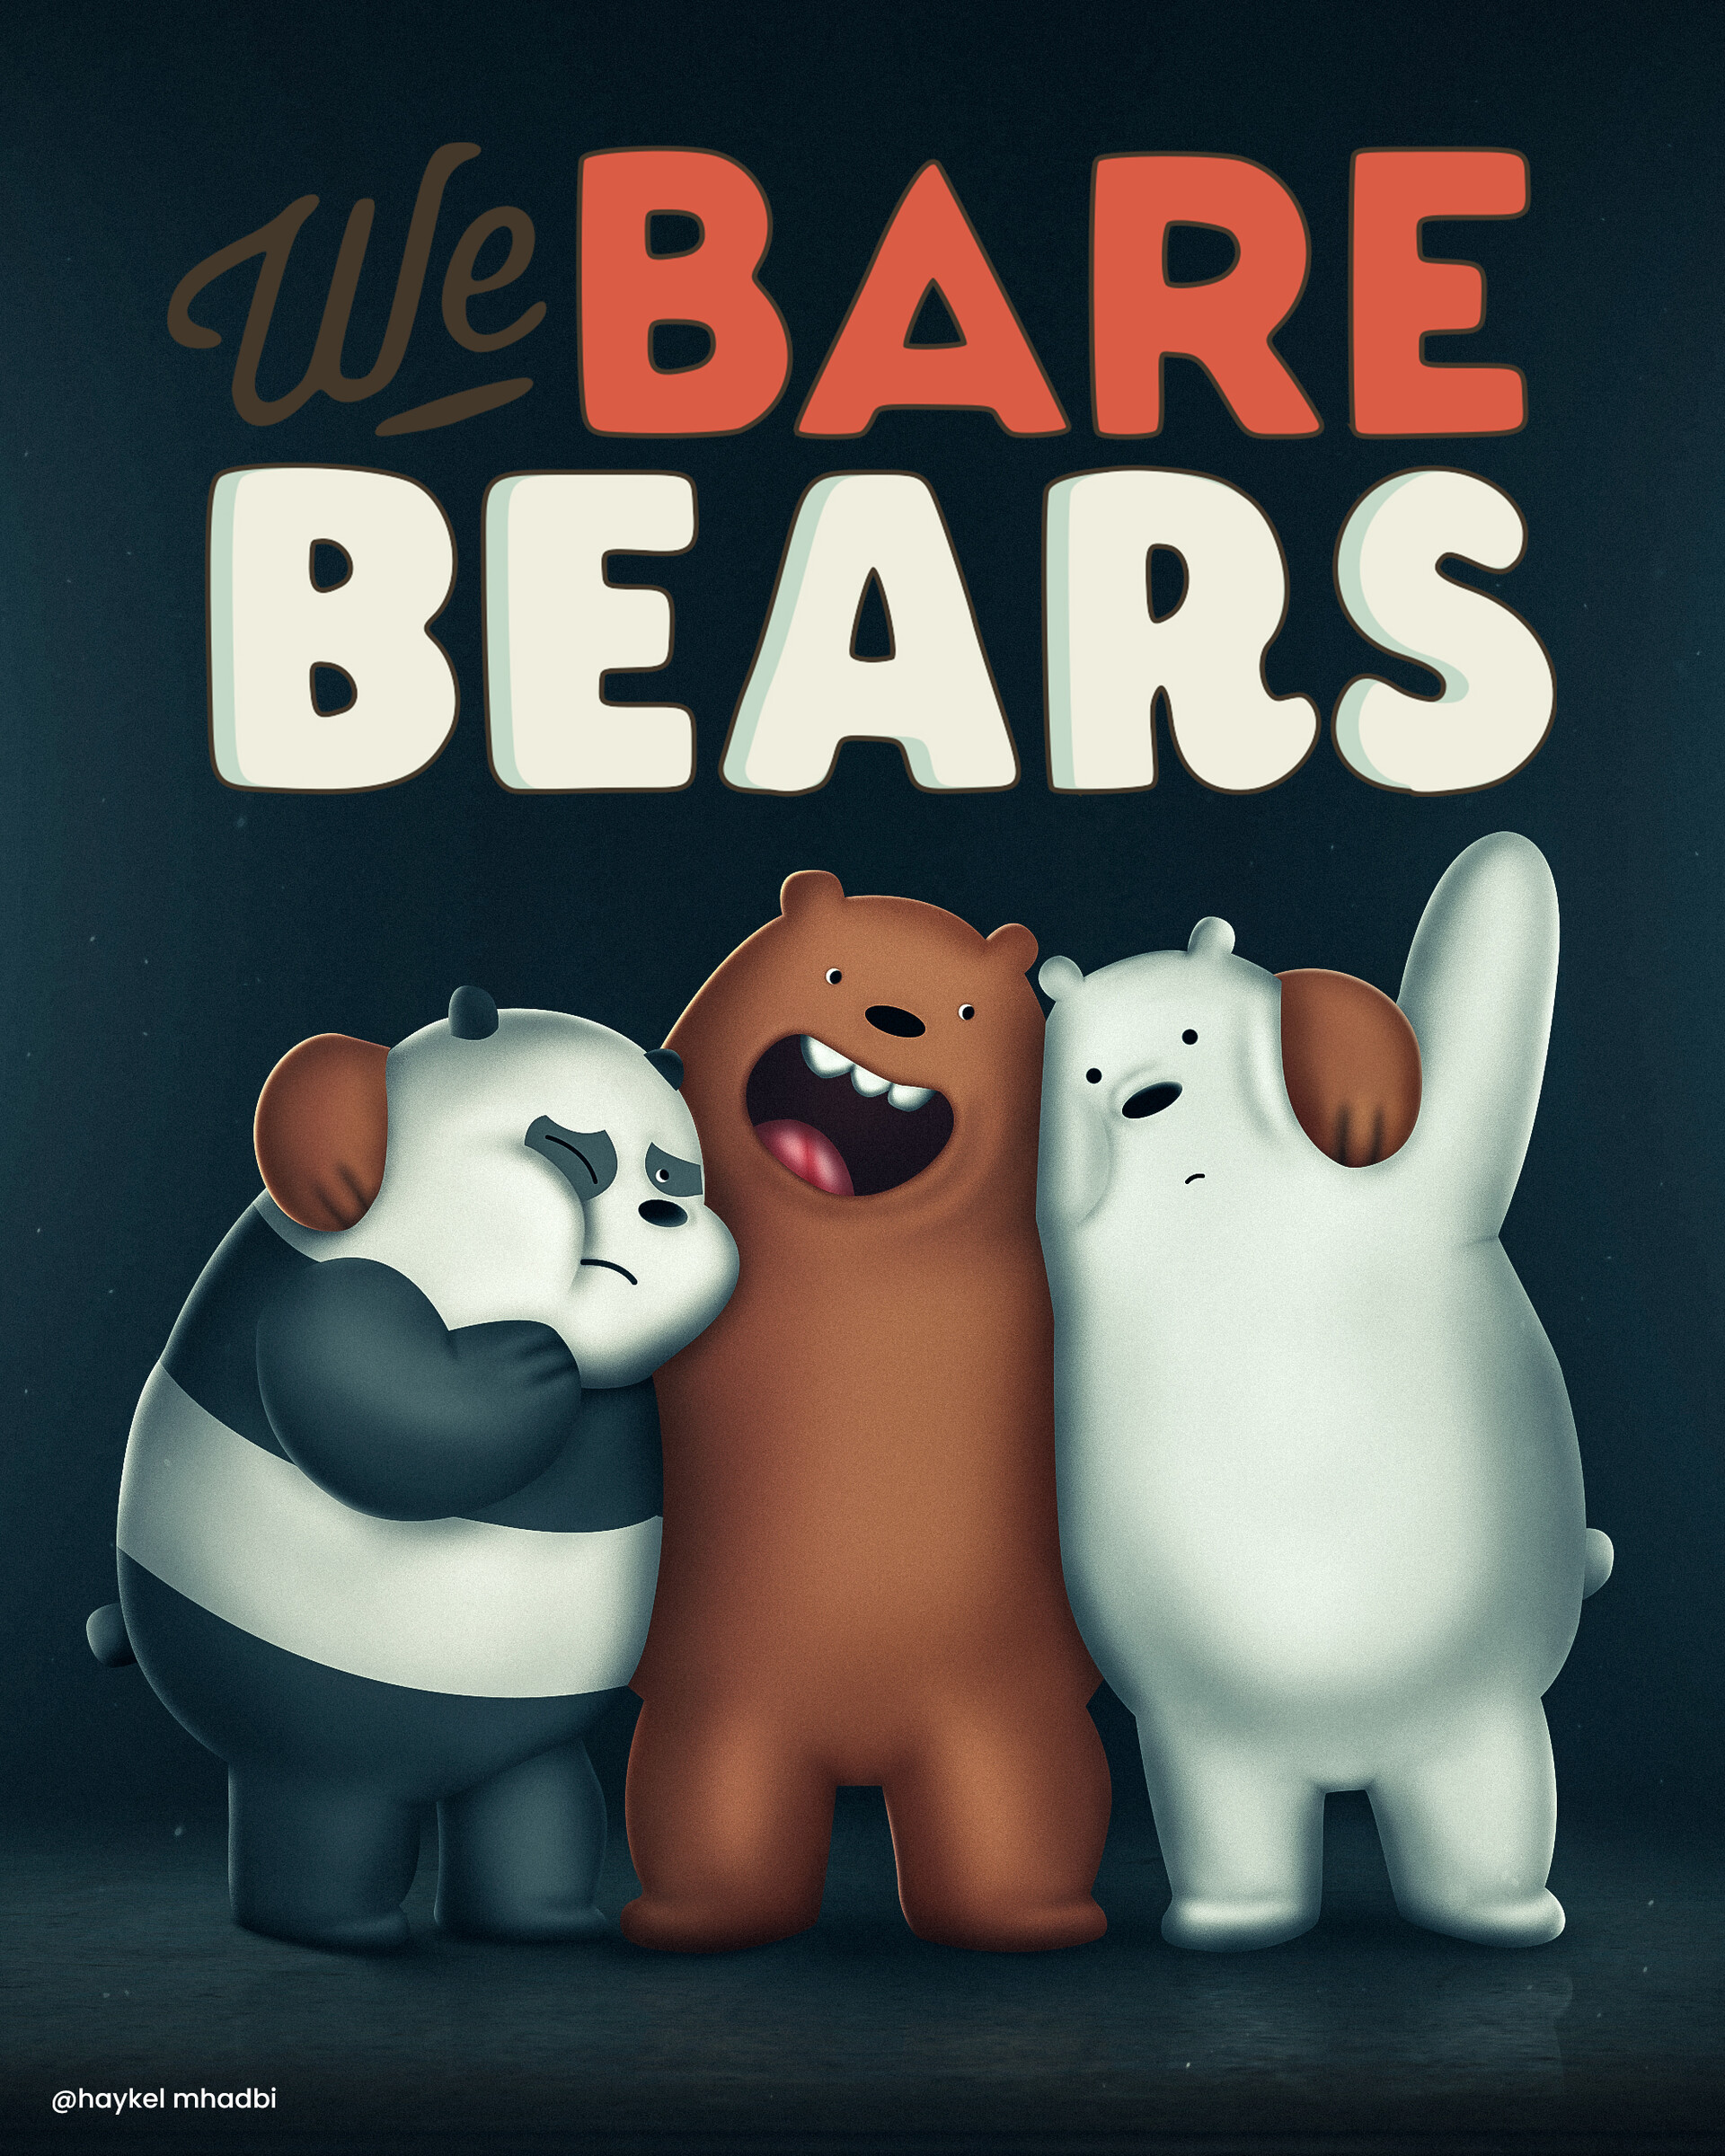 We Bare Bears - Paws | Art Board Print